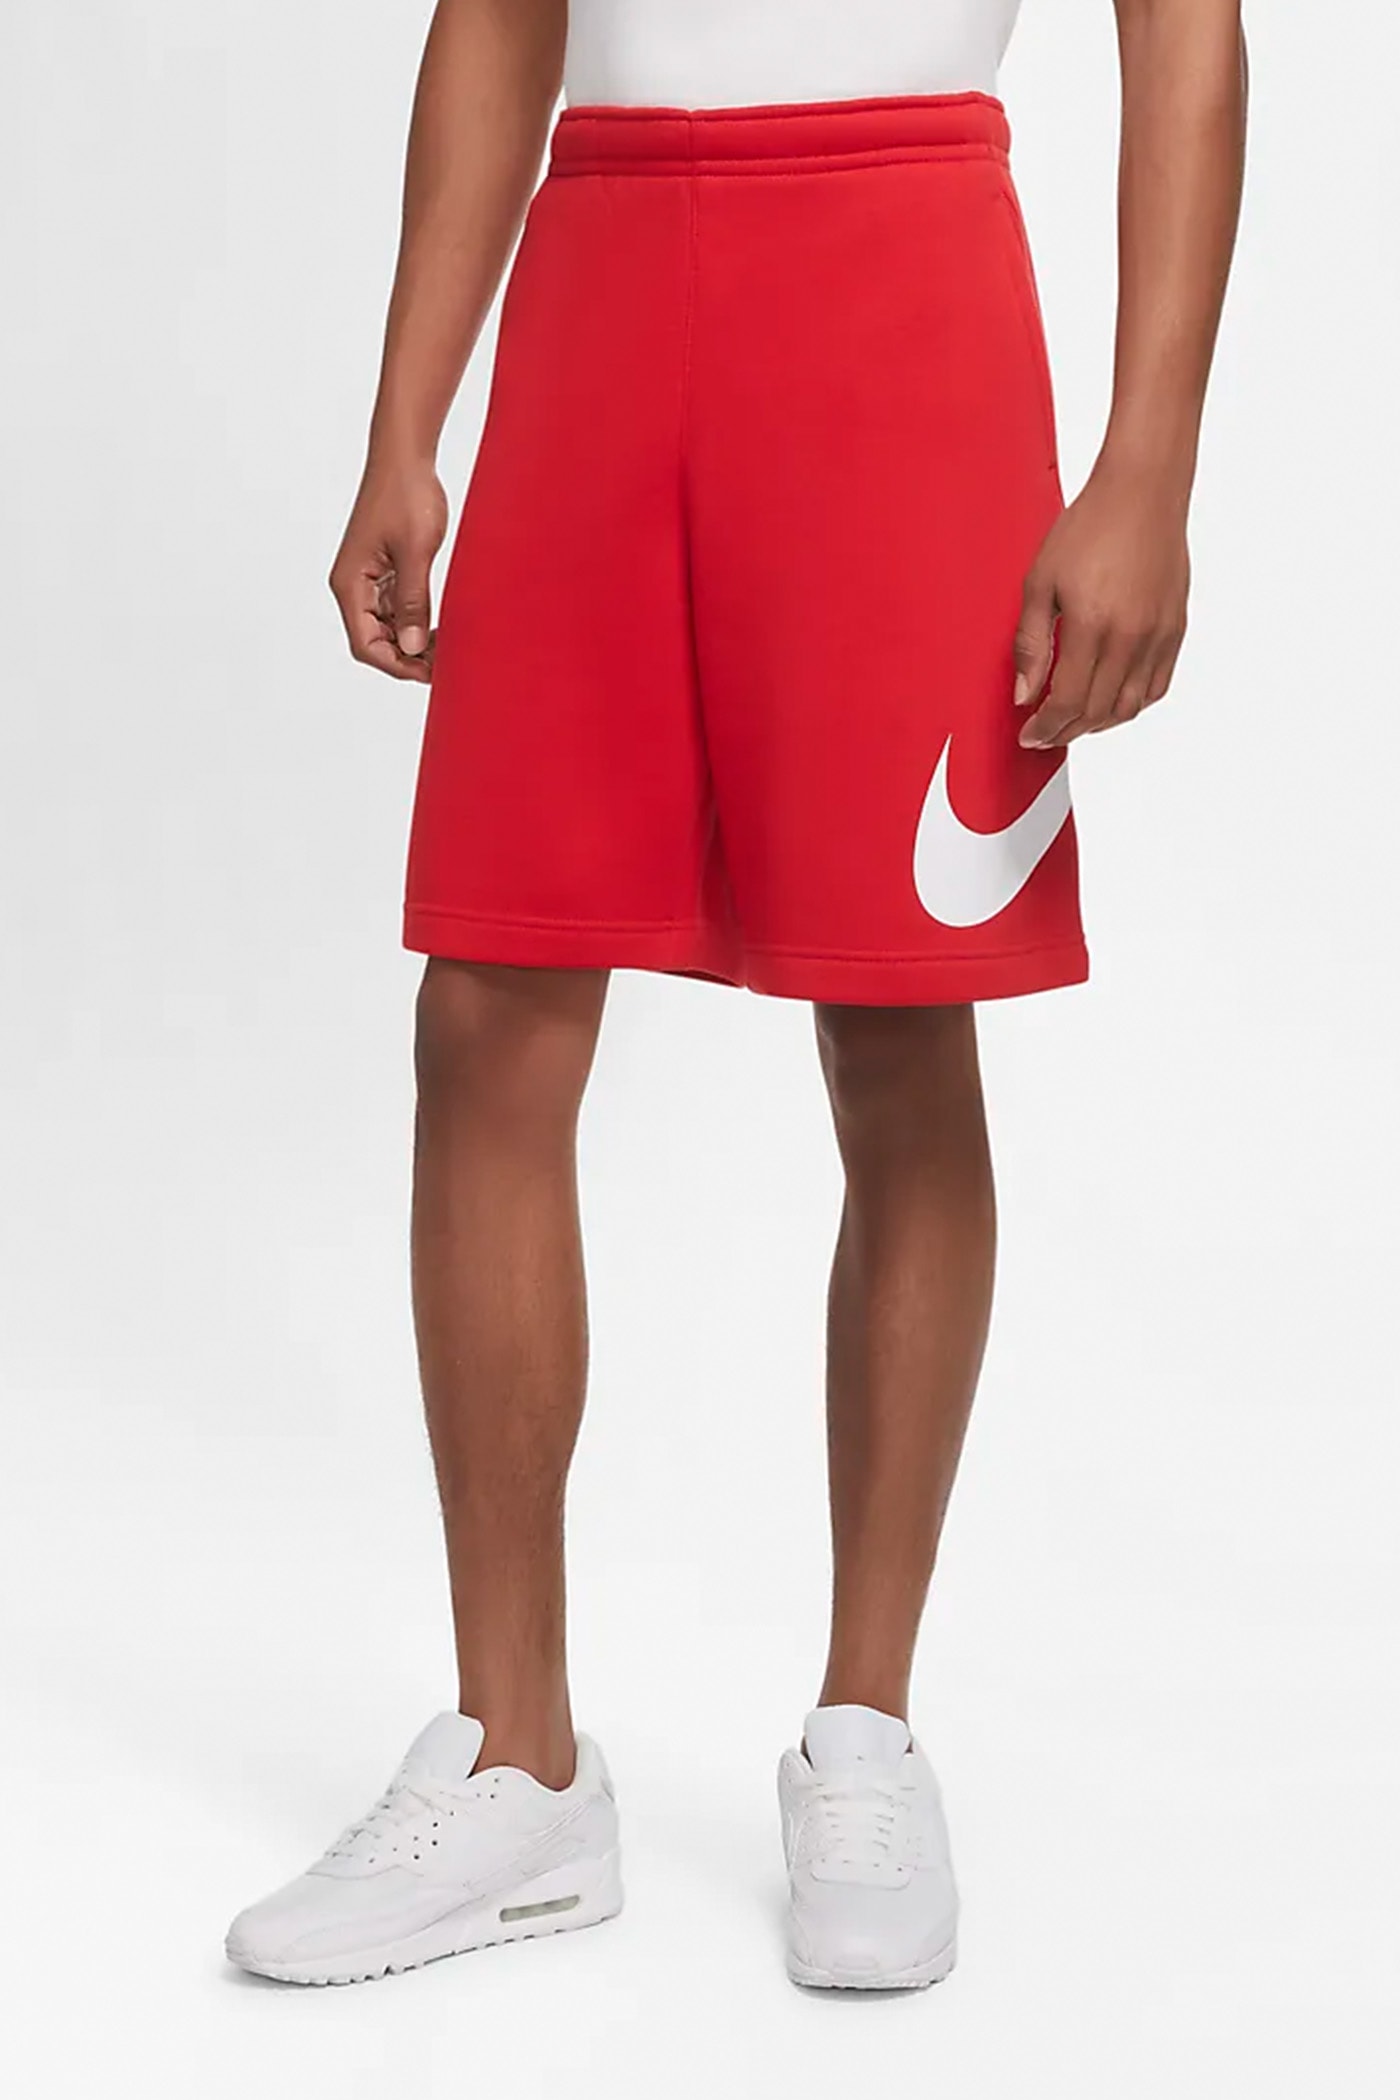 Nike Best Back to School Basics sweats tshirts